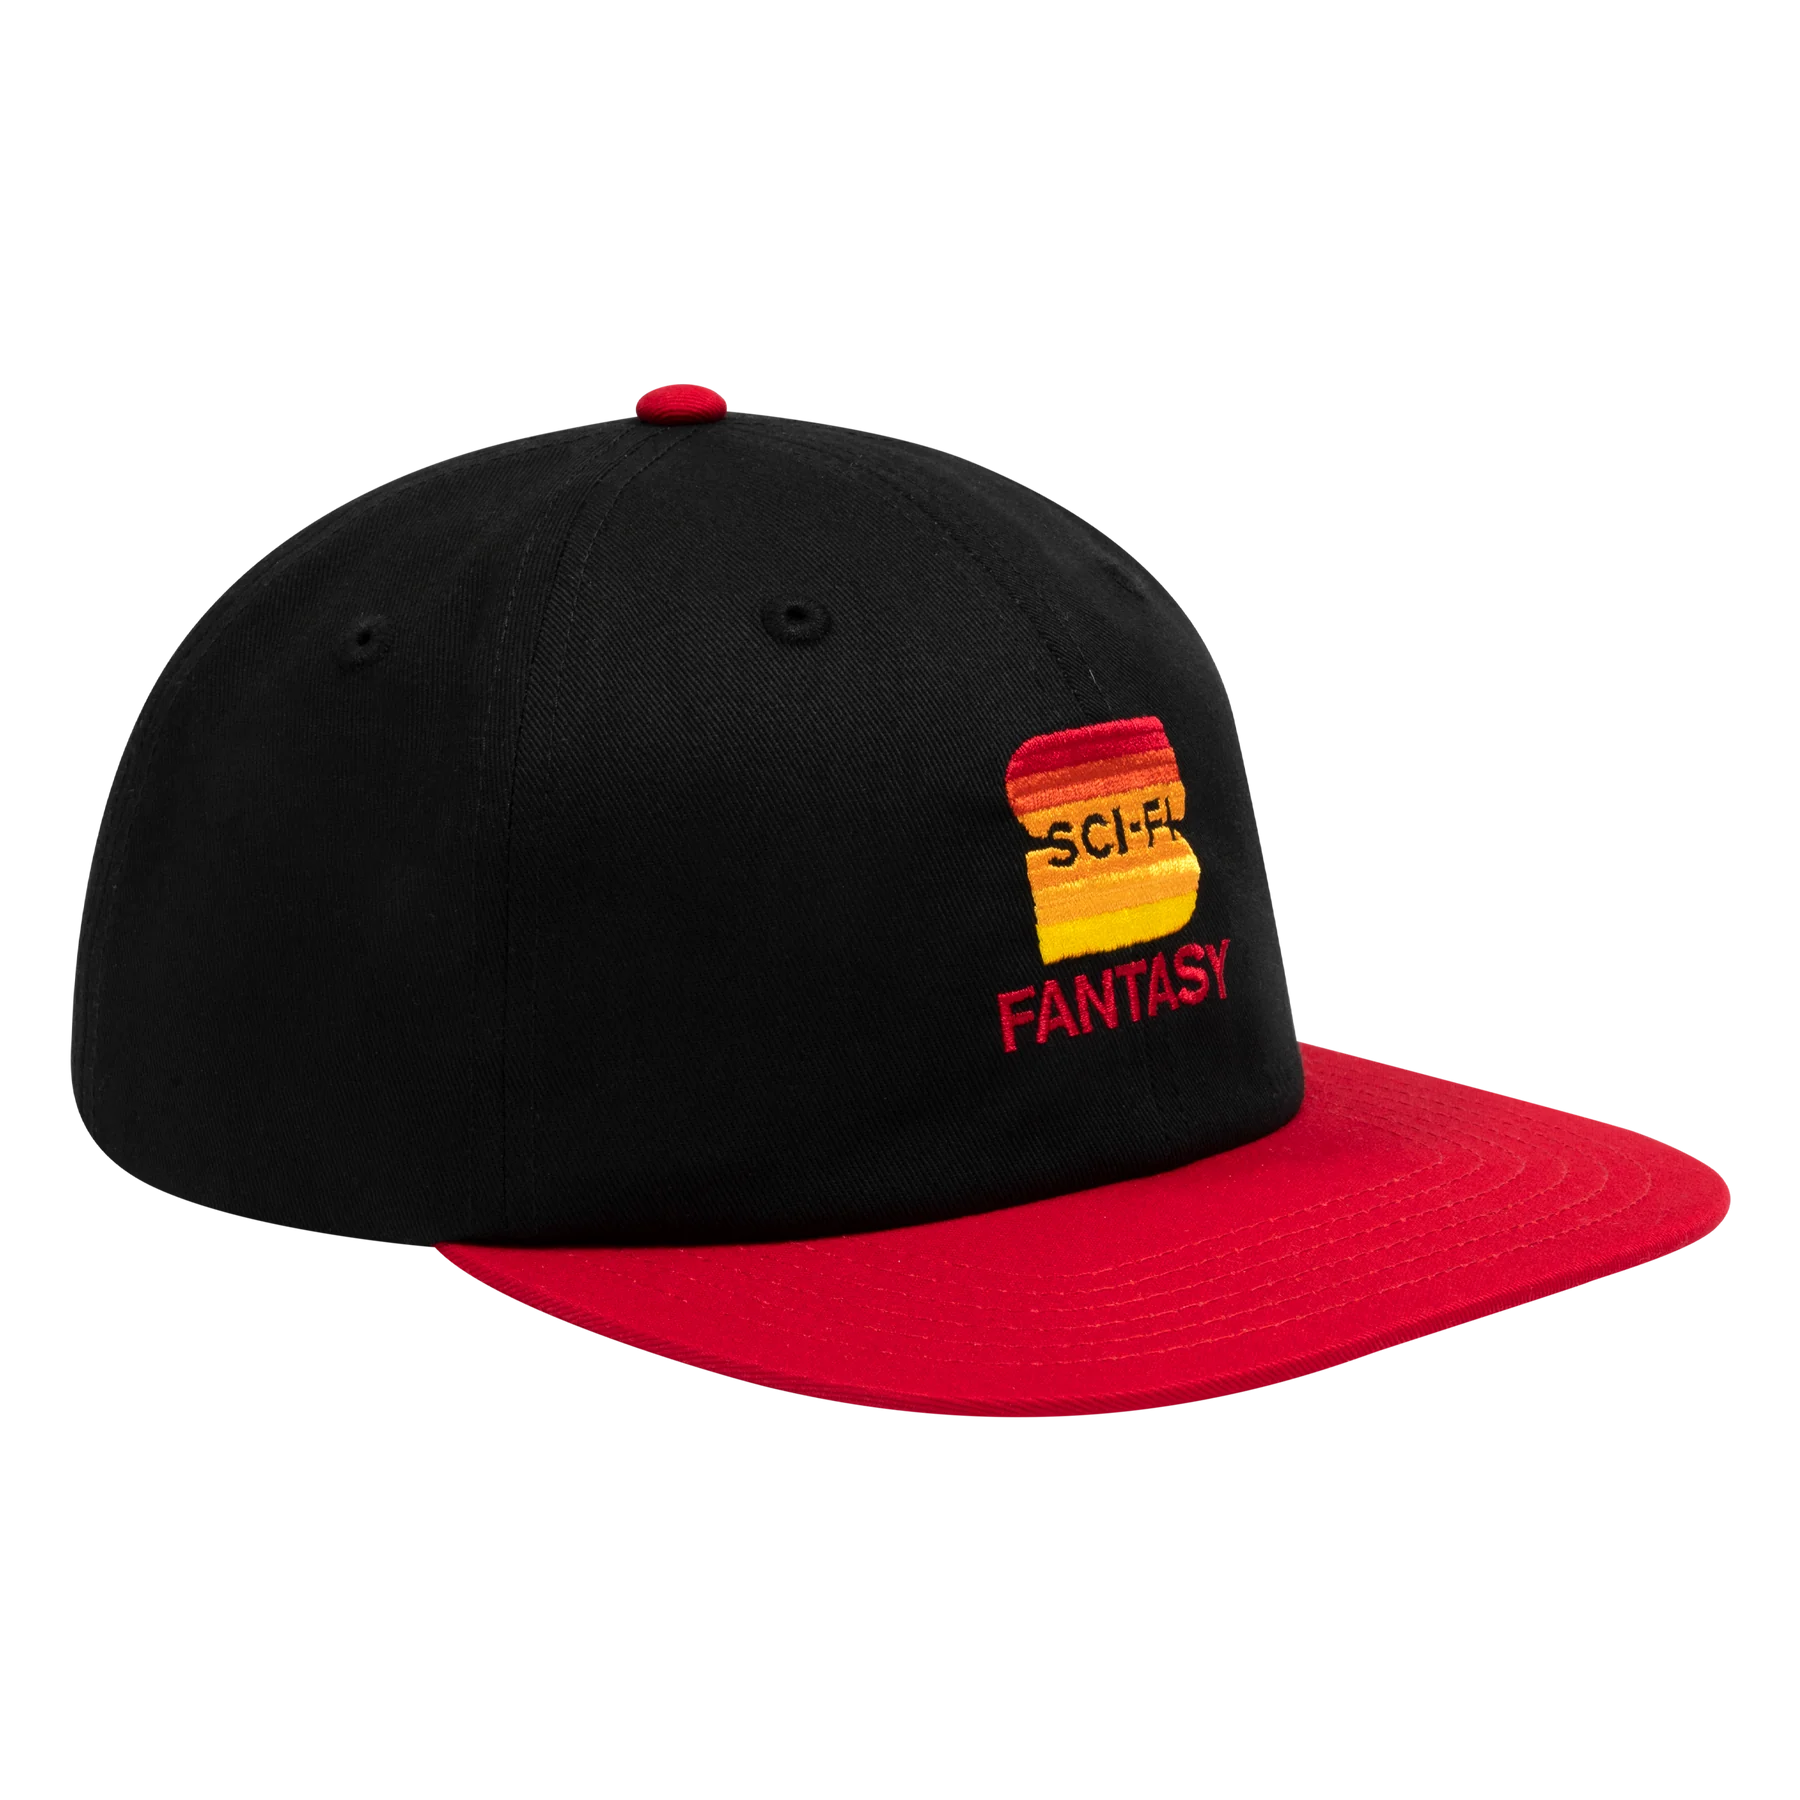 Sci-Fi Fantasy S Hat Black/Red